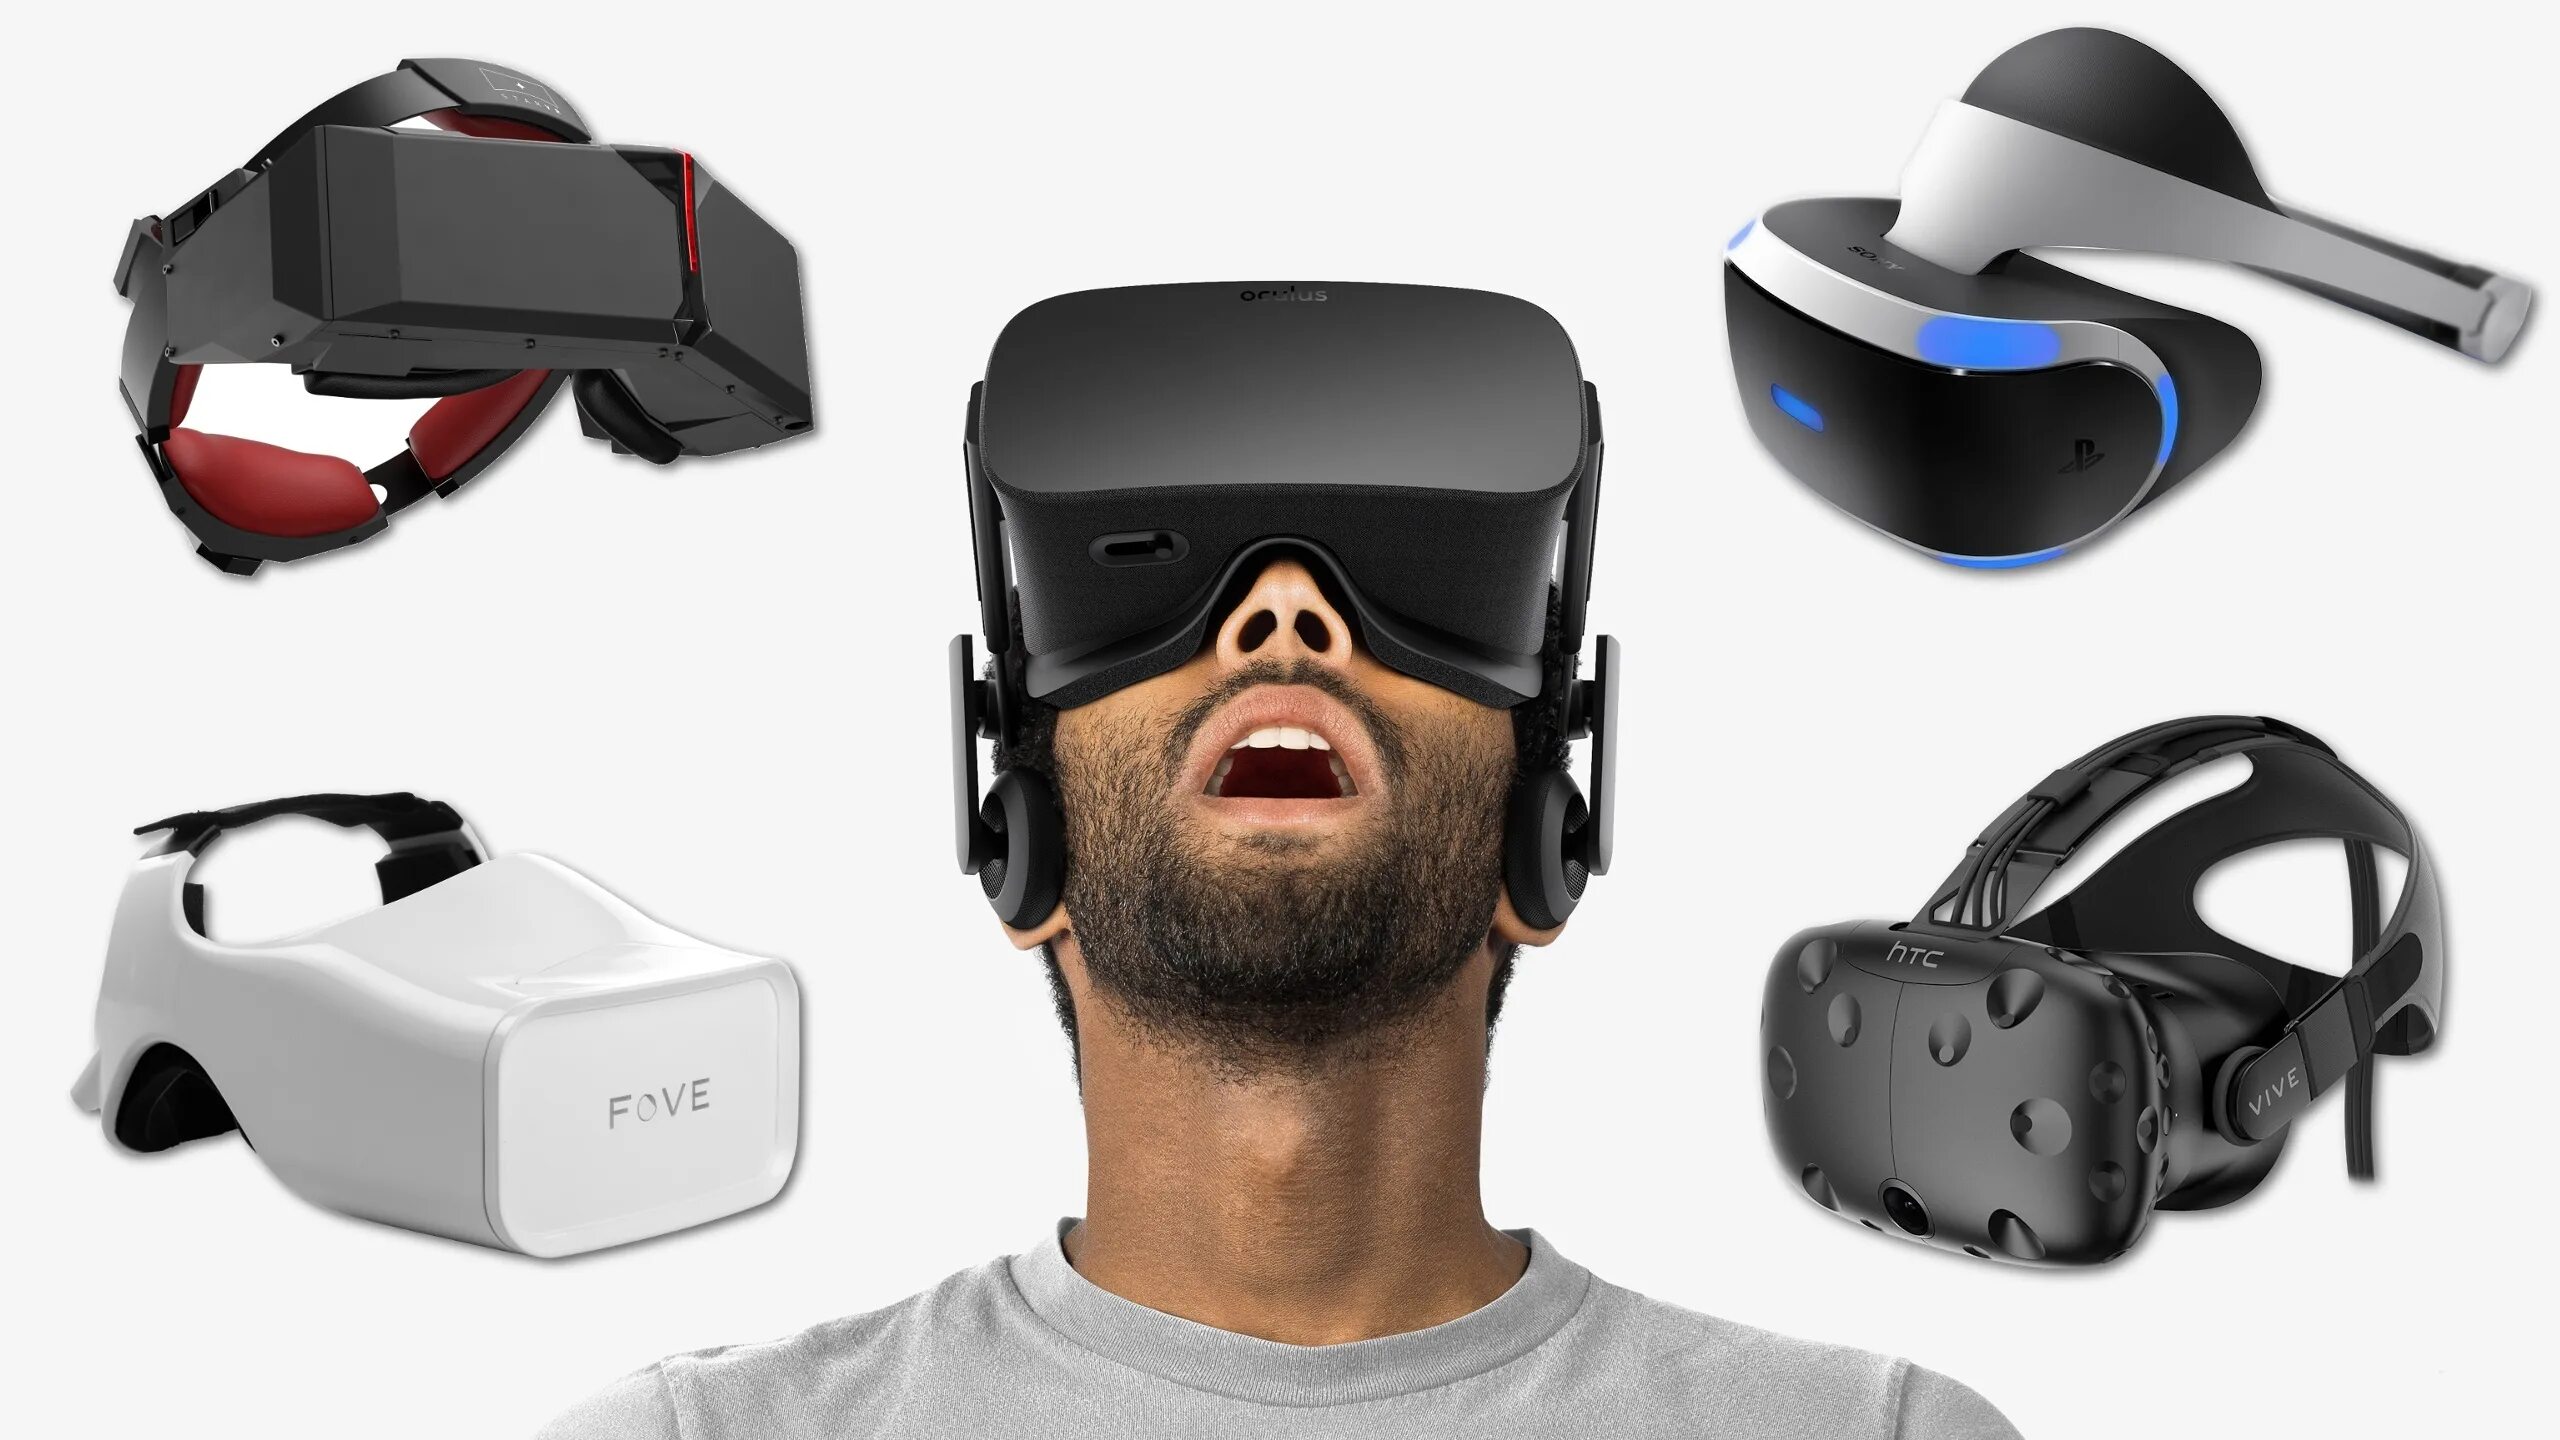 VR очки HTC Vive. Sony PLAYSTATION VR HTC Vive Oculus Rift VR. VR очки Vive Pro 2 весь комплект. PS VR 2 очки виртуальной реальности.